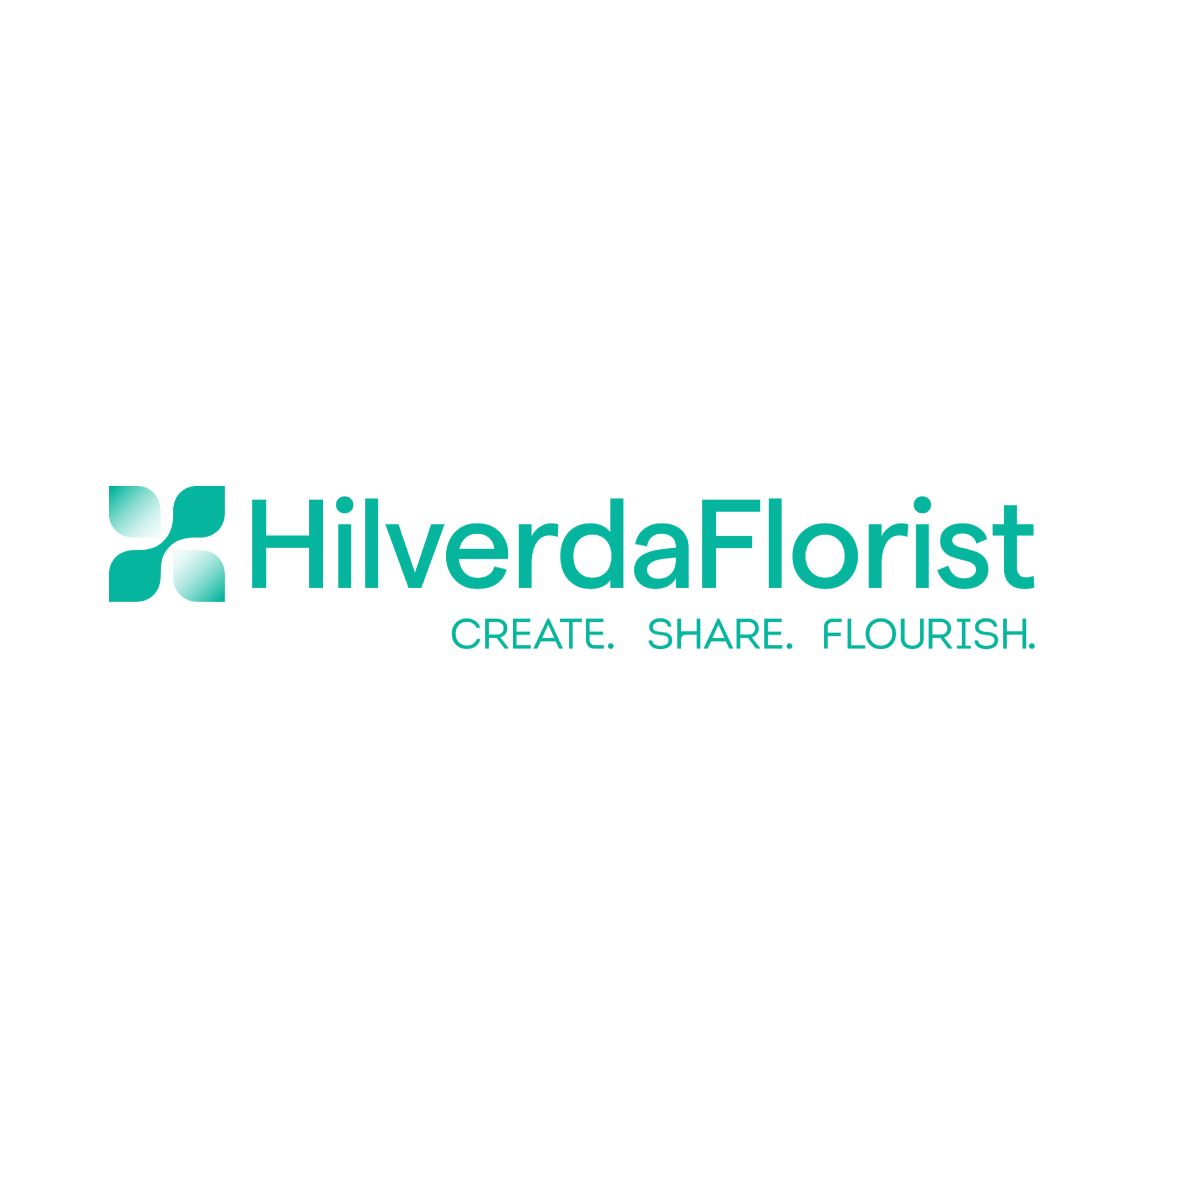 HilverdaFlorist logo